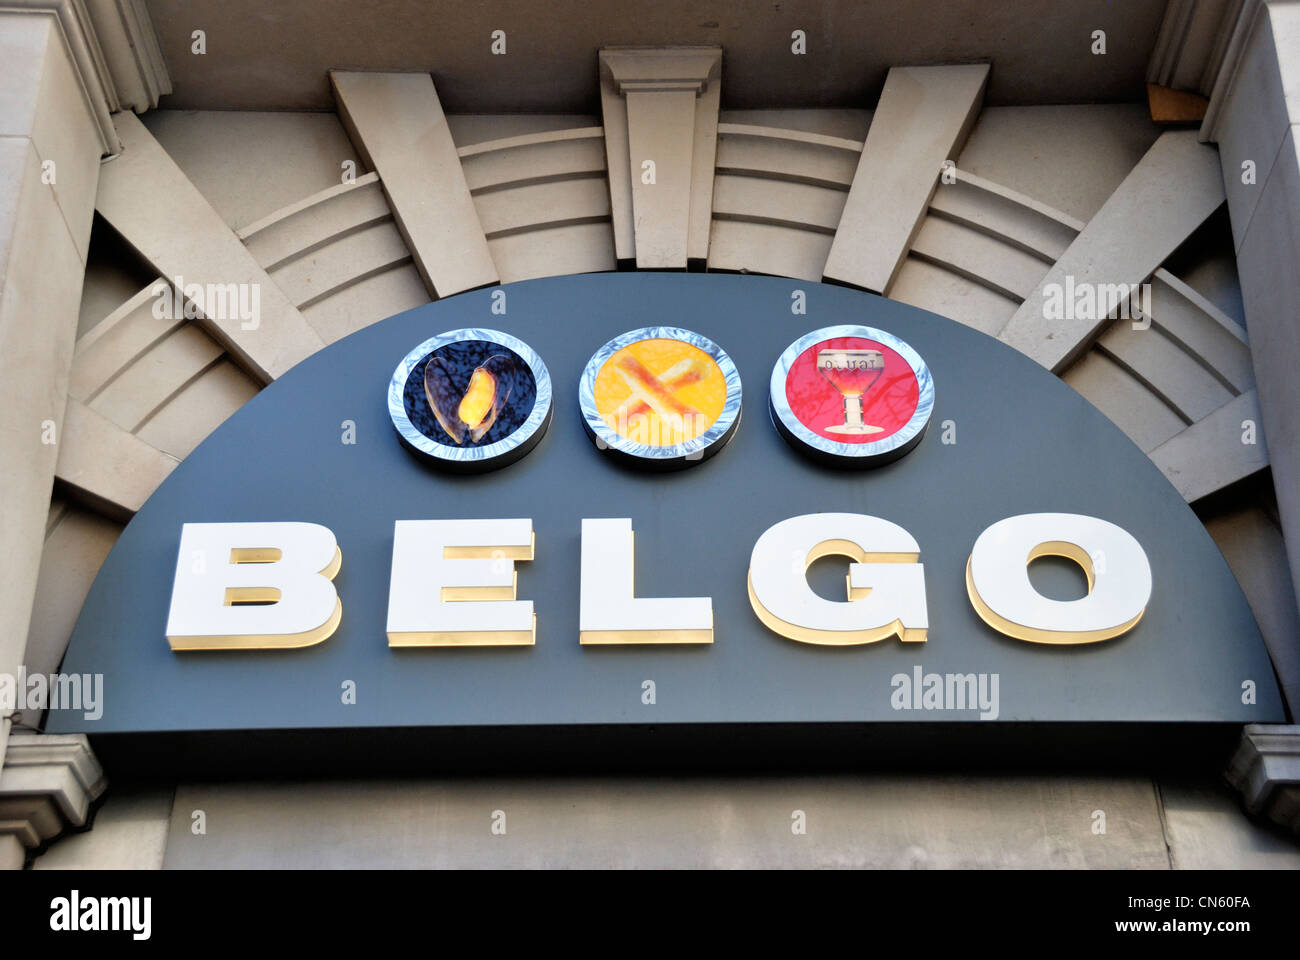 Belgo Belgian restaurant and bar sign logo, London, UK Stock Photo